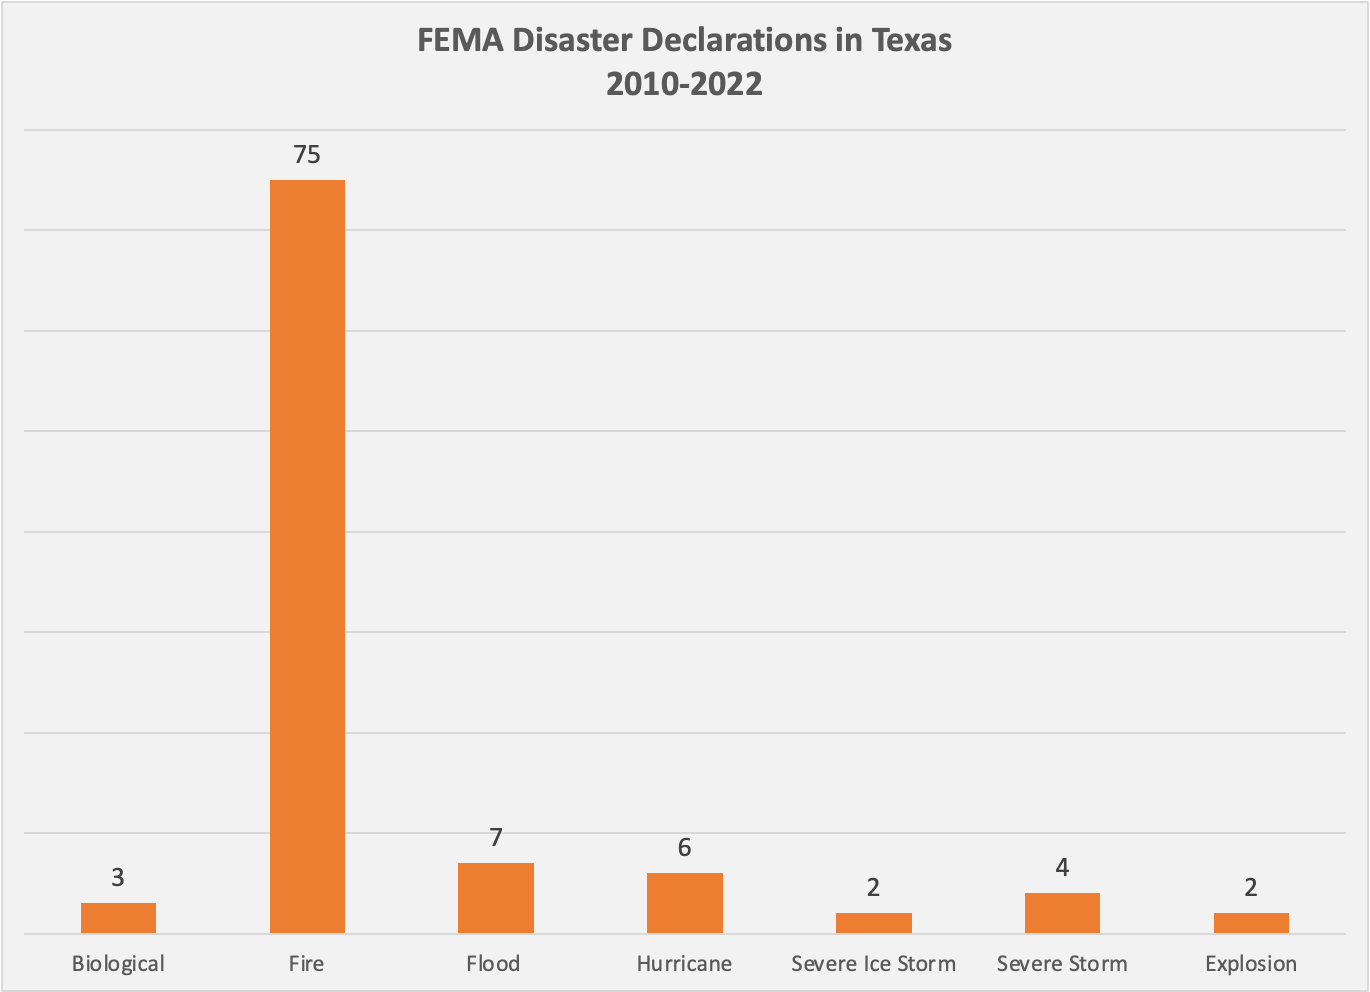 "FEMA Disaster Declarations in Texas 2010-2022"